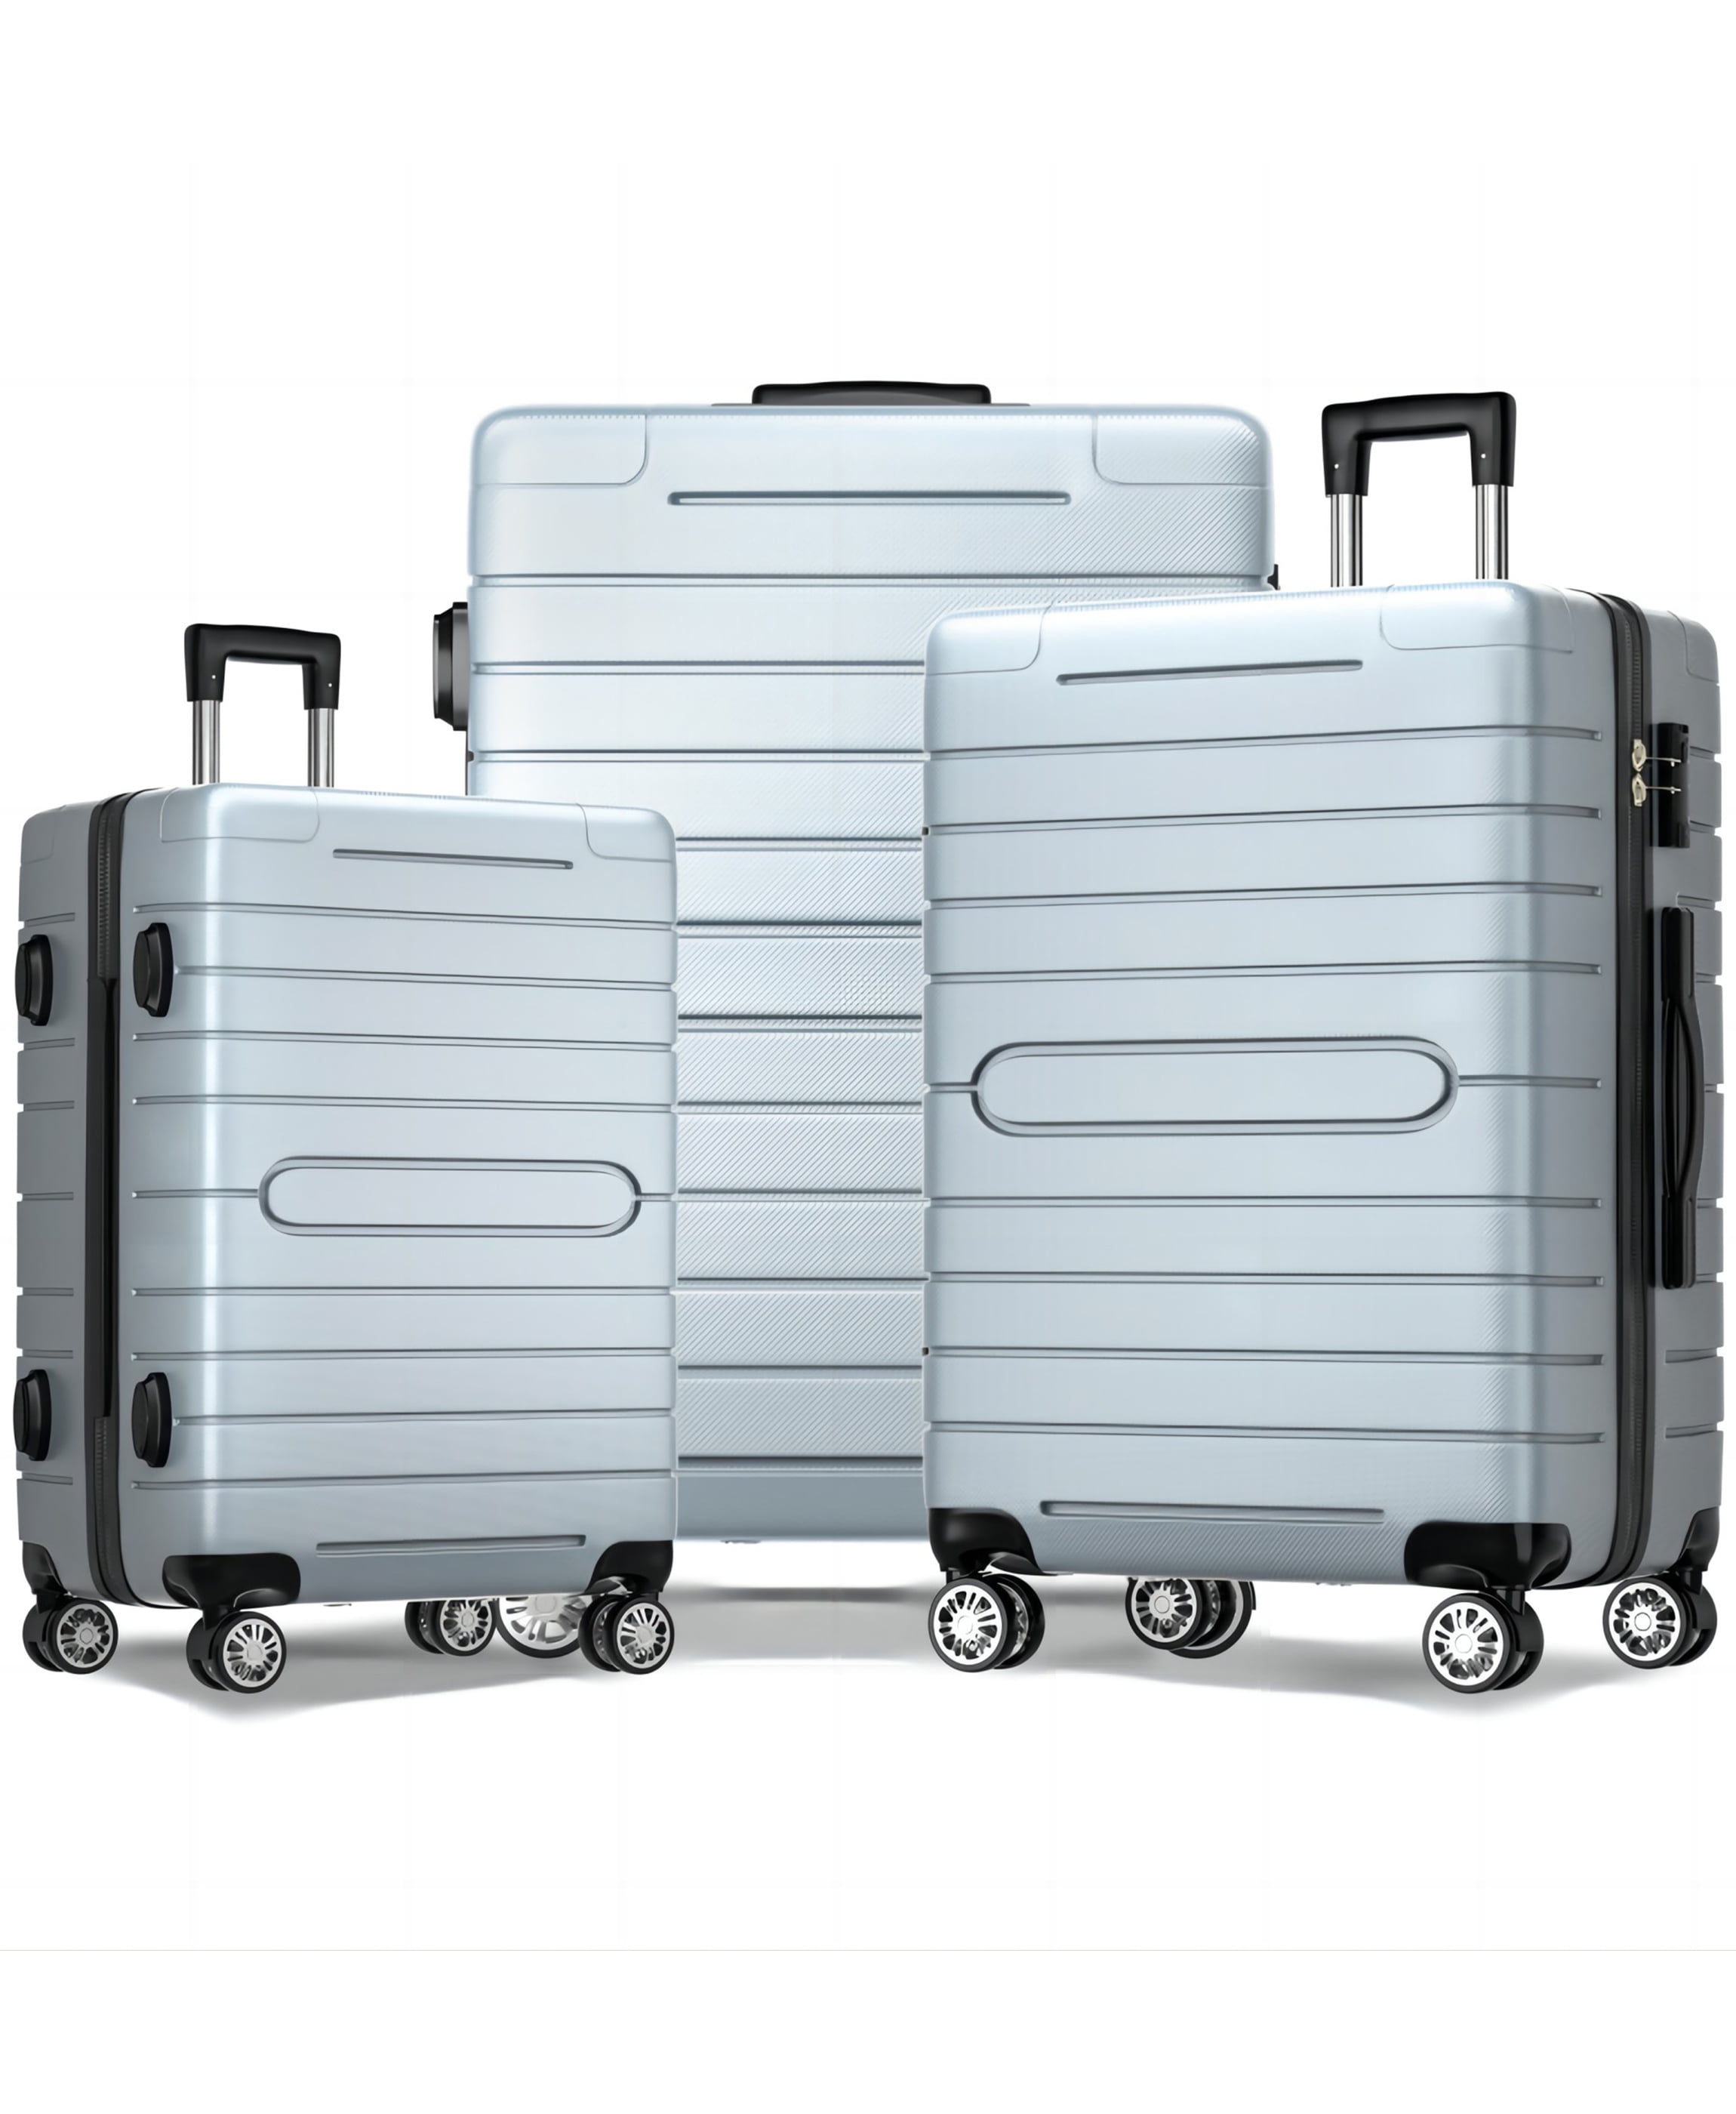 HONGGE 3 Piece Luggage Set ABS Hard Shell luggage with TSA Lock, Silver ...